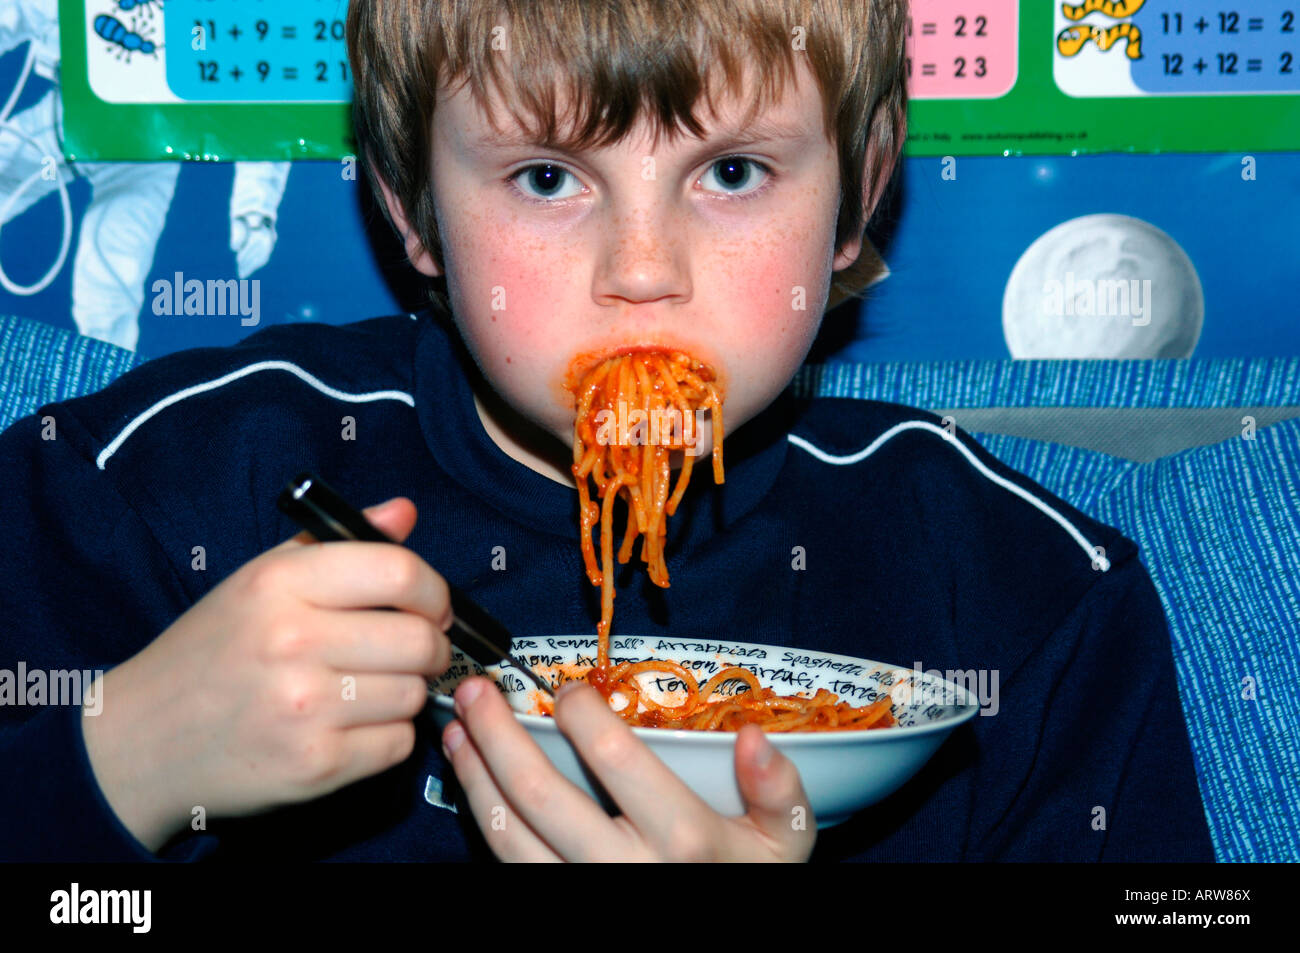 A 13yr Old Boy Eating Spaghetti. Stock Photo